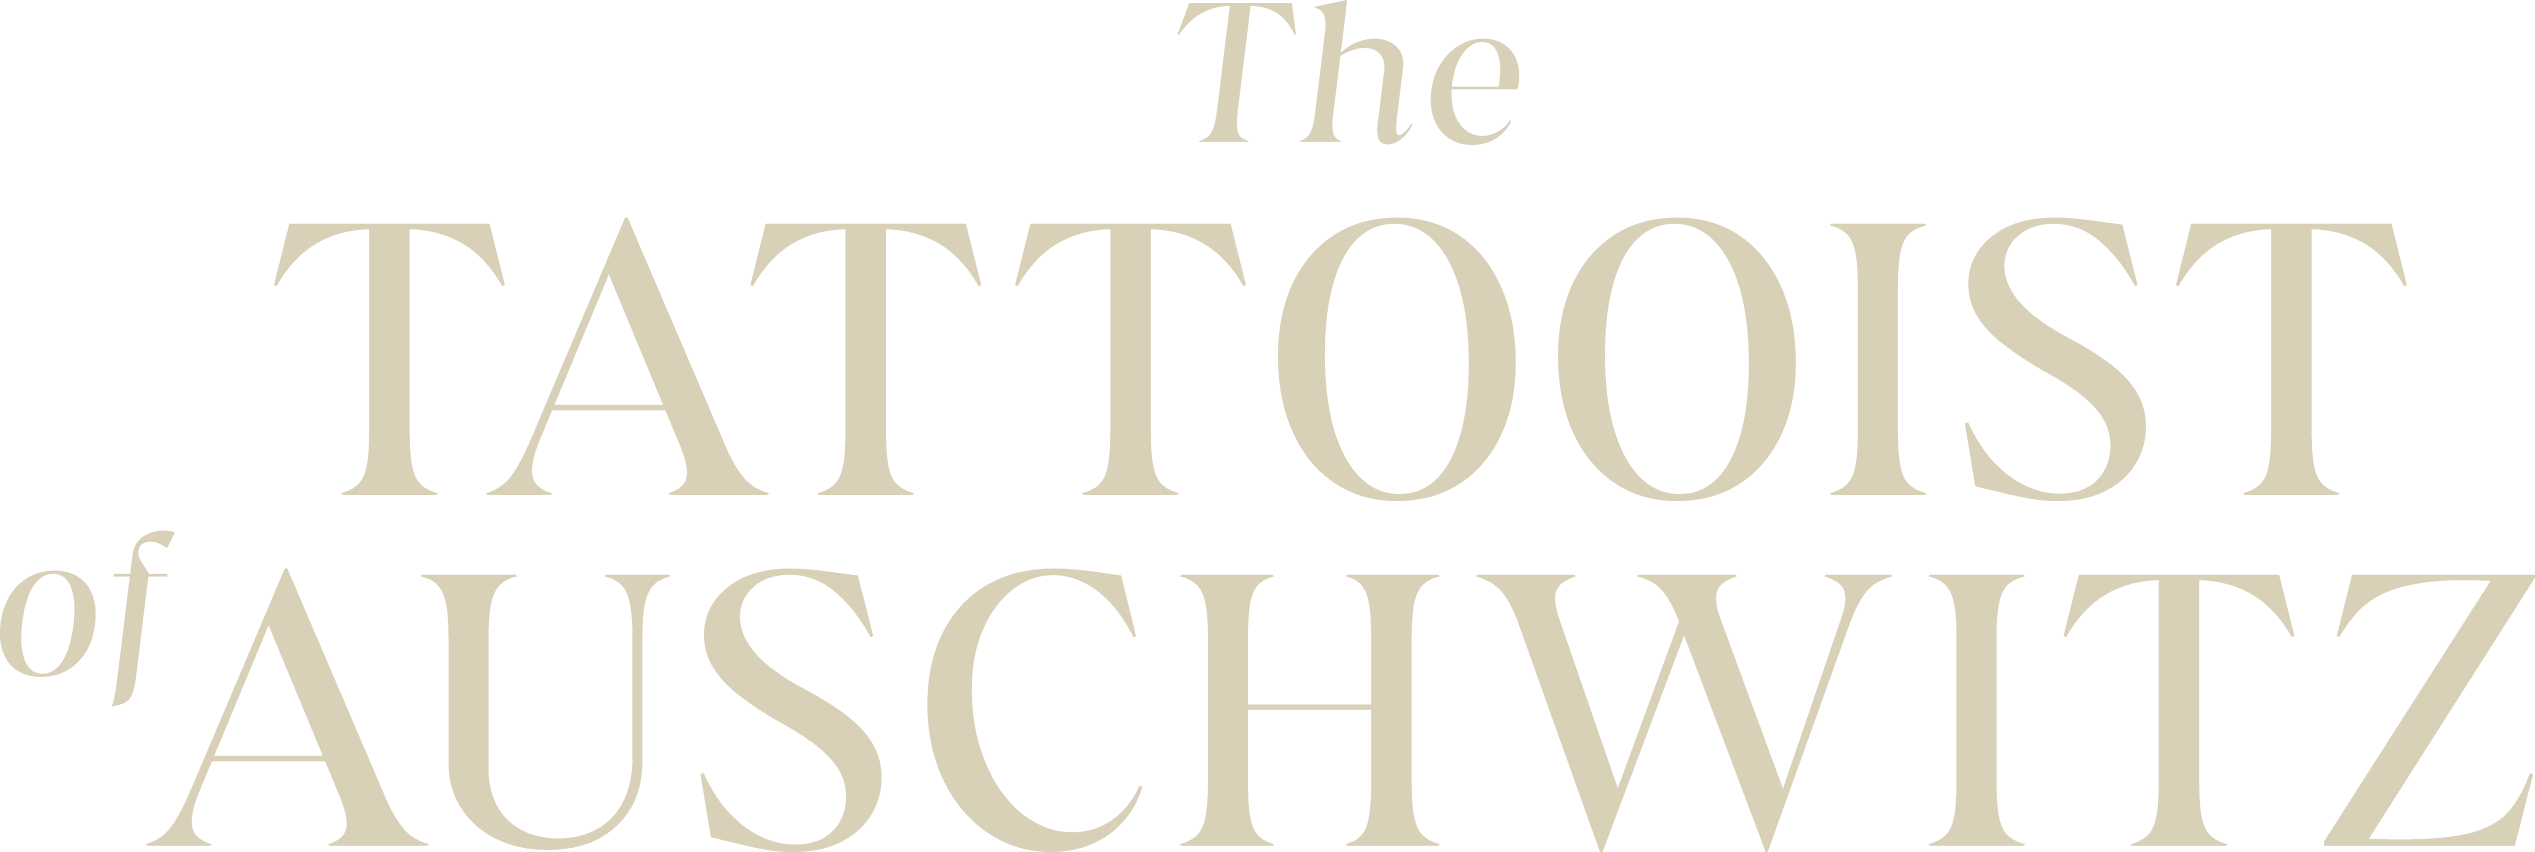 The Tattooist of Auschwitz logo